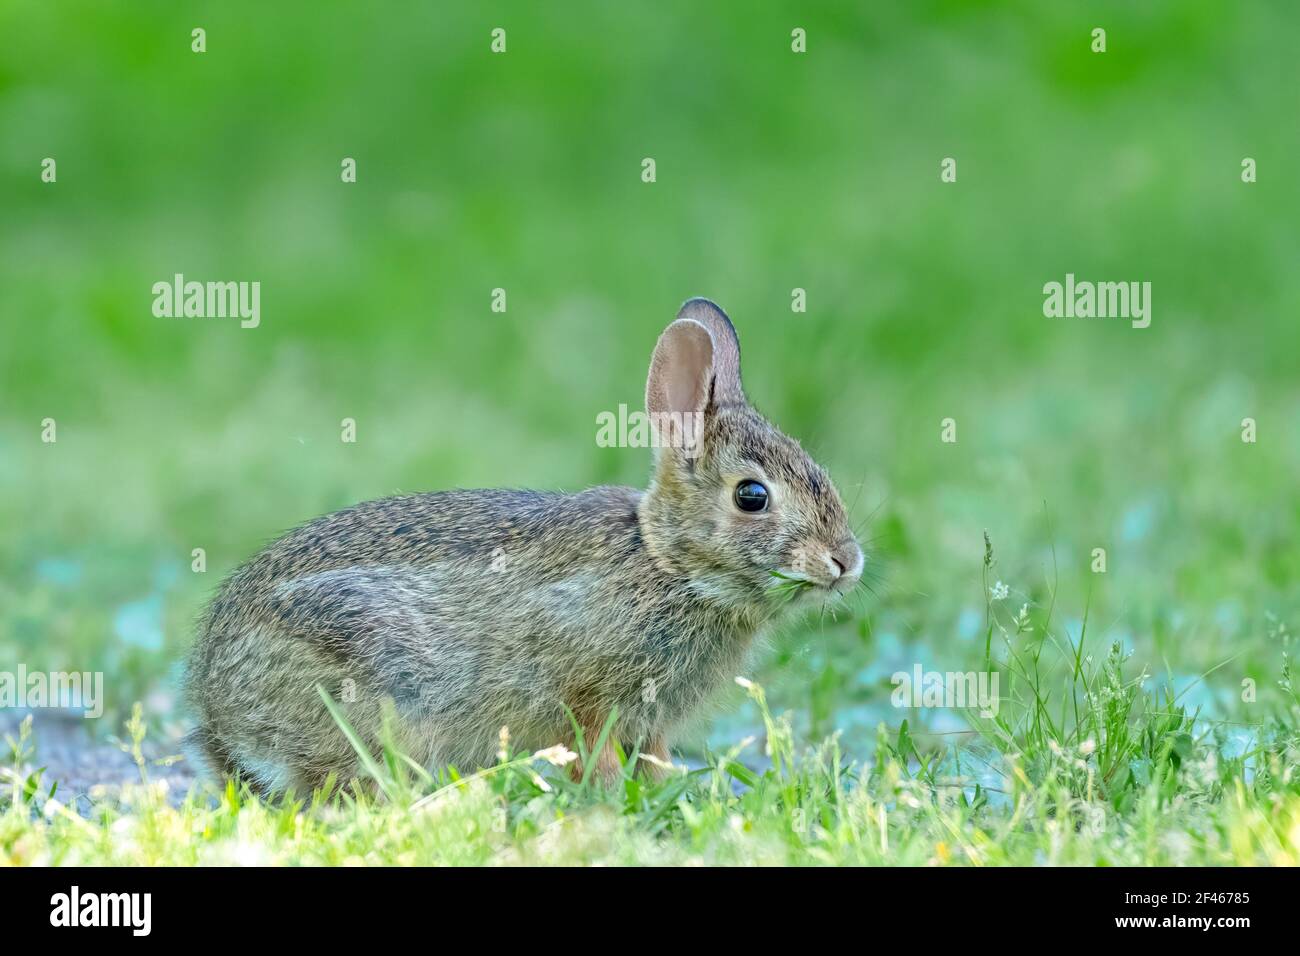 Baby rabbit (kitten) eating in a field Stock Photo